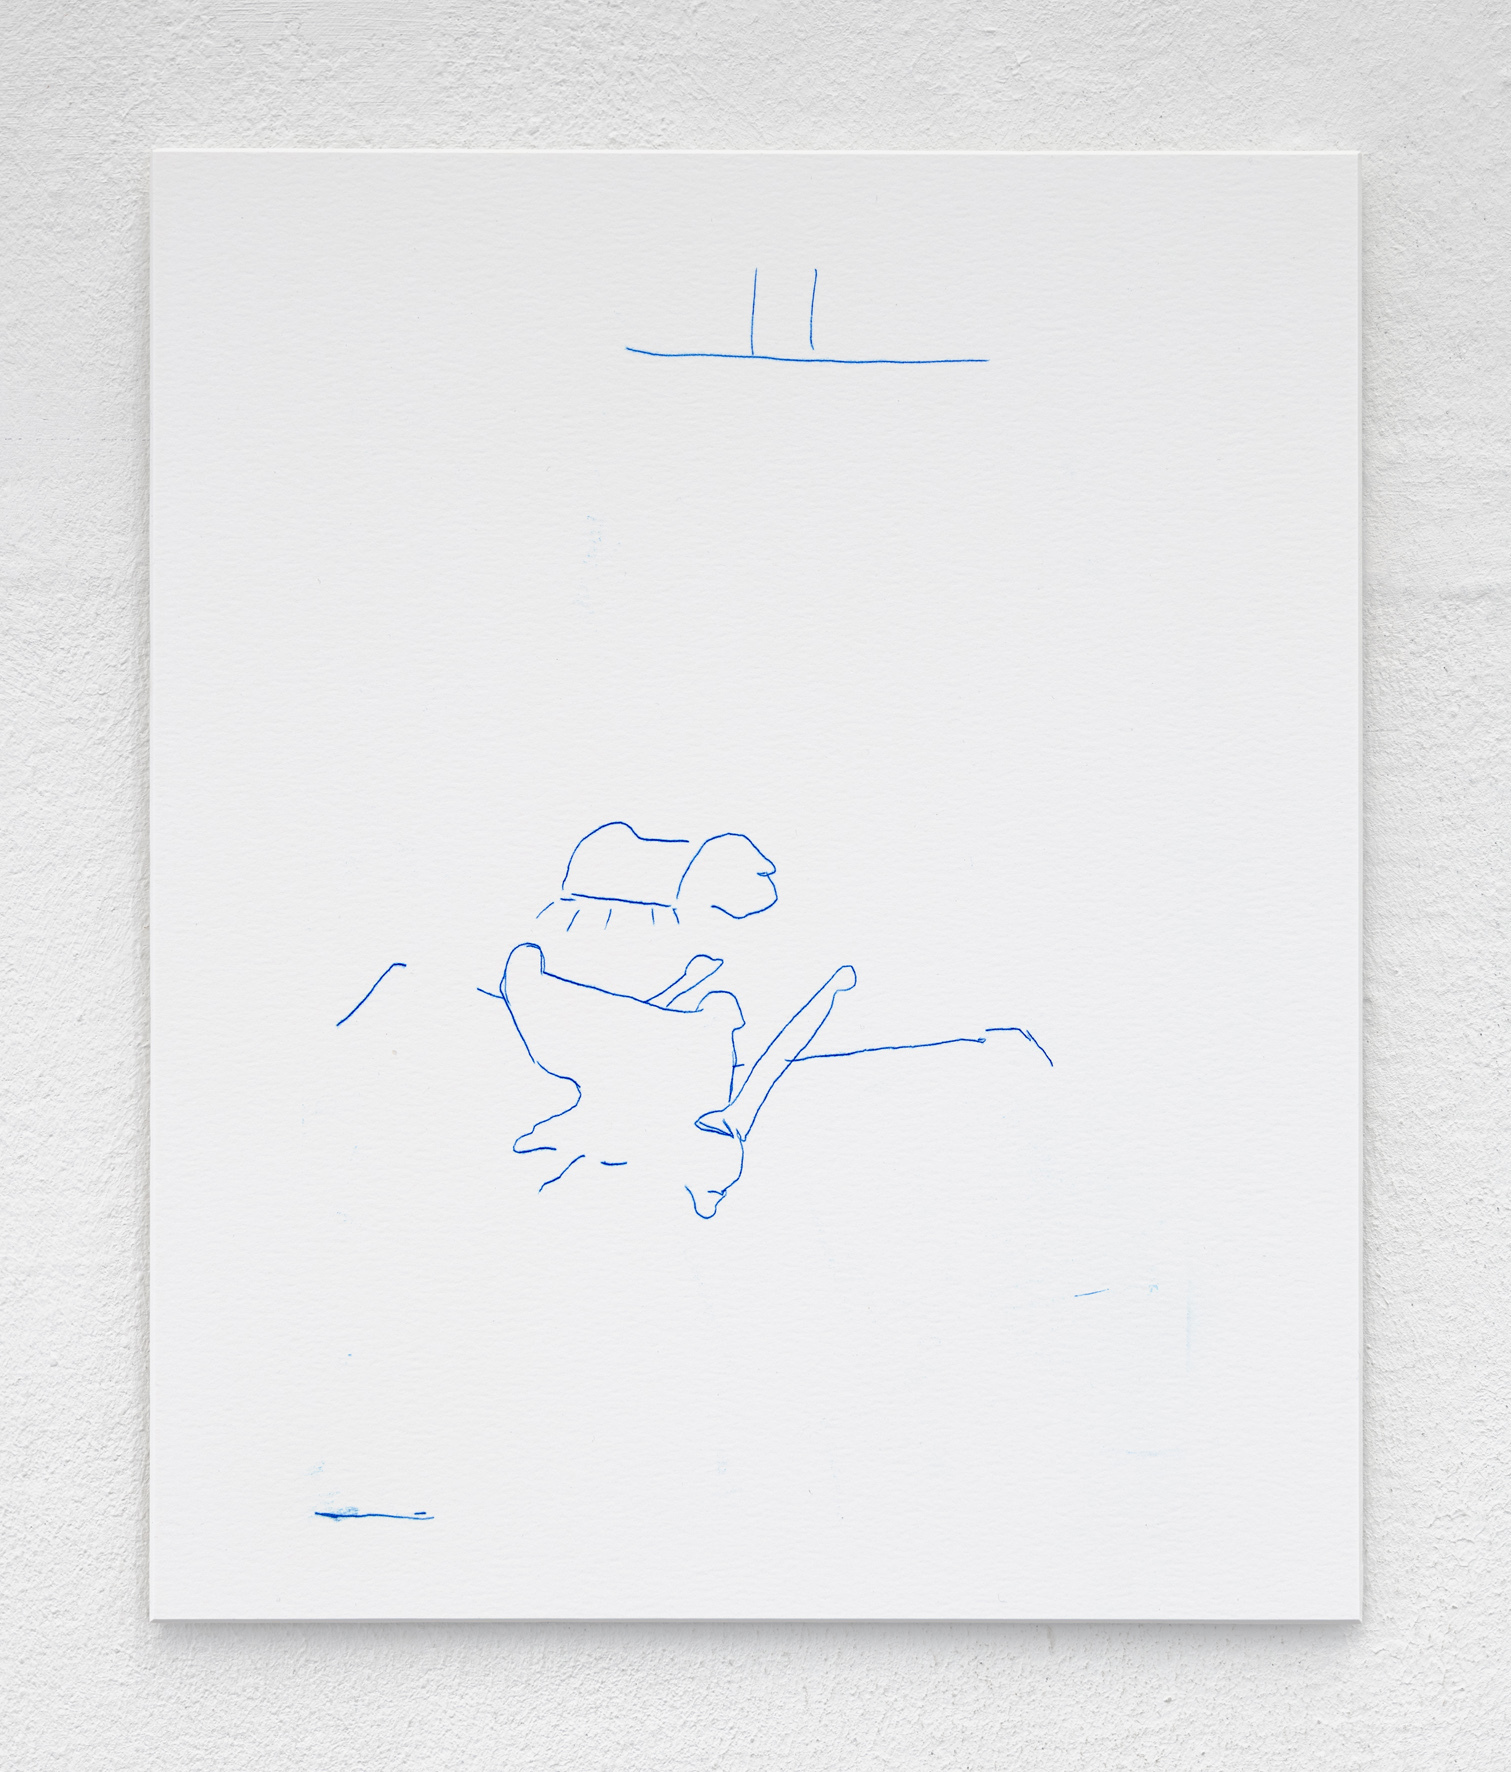 Sarah Lehnerer, 3.1., 2020, pencil on carton, 30 x 25cm